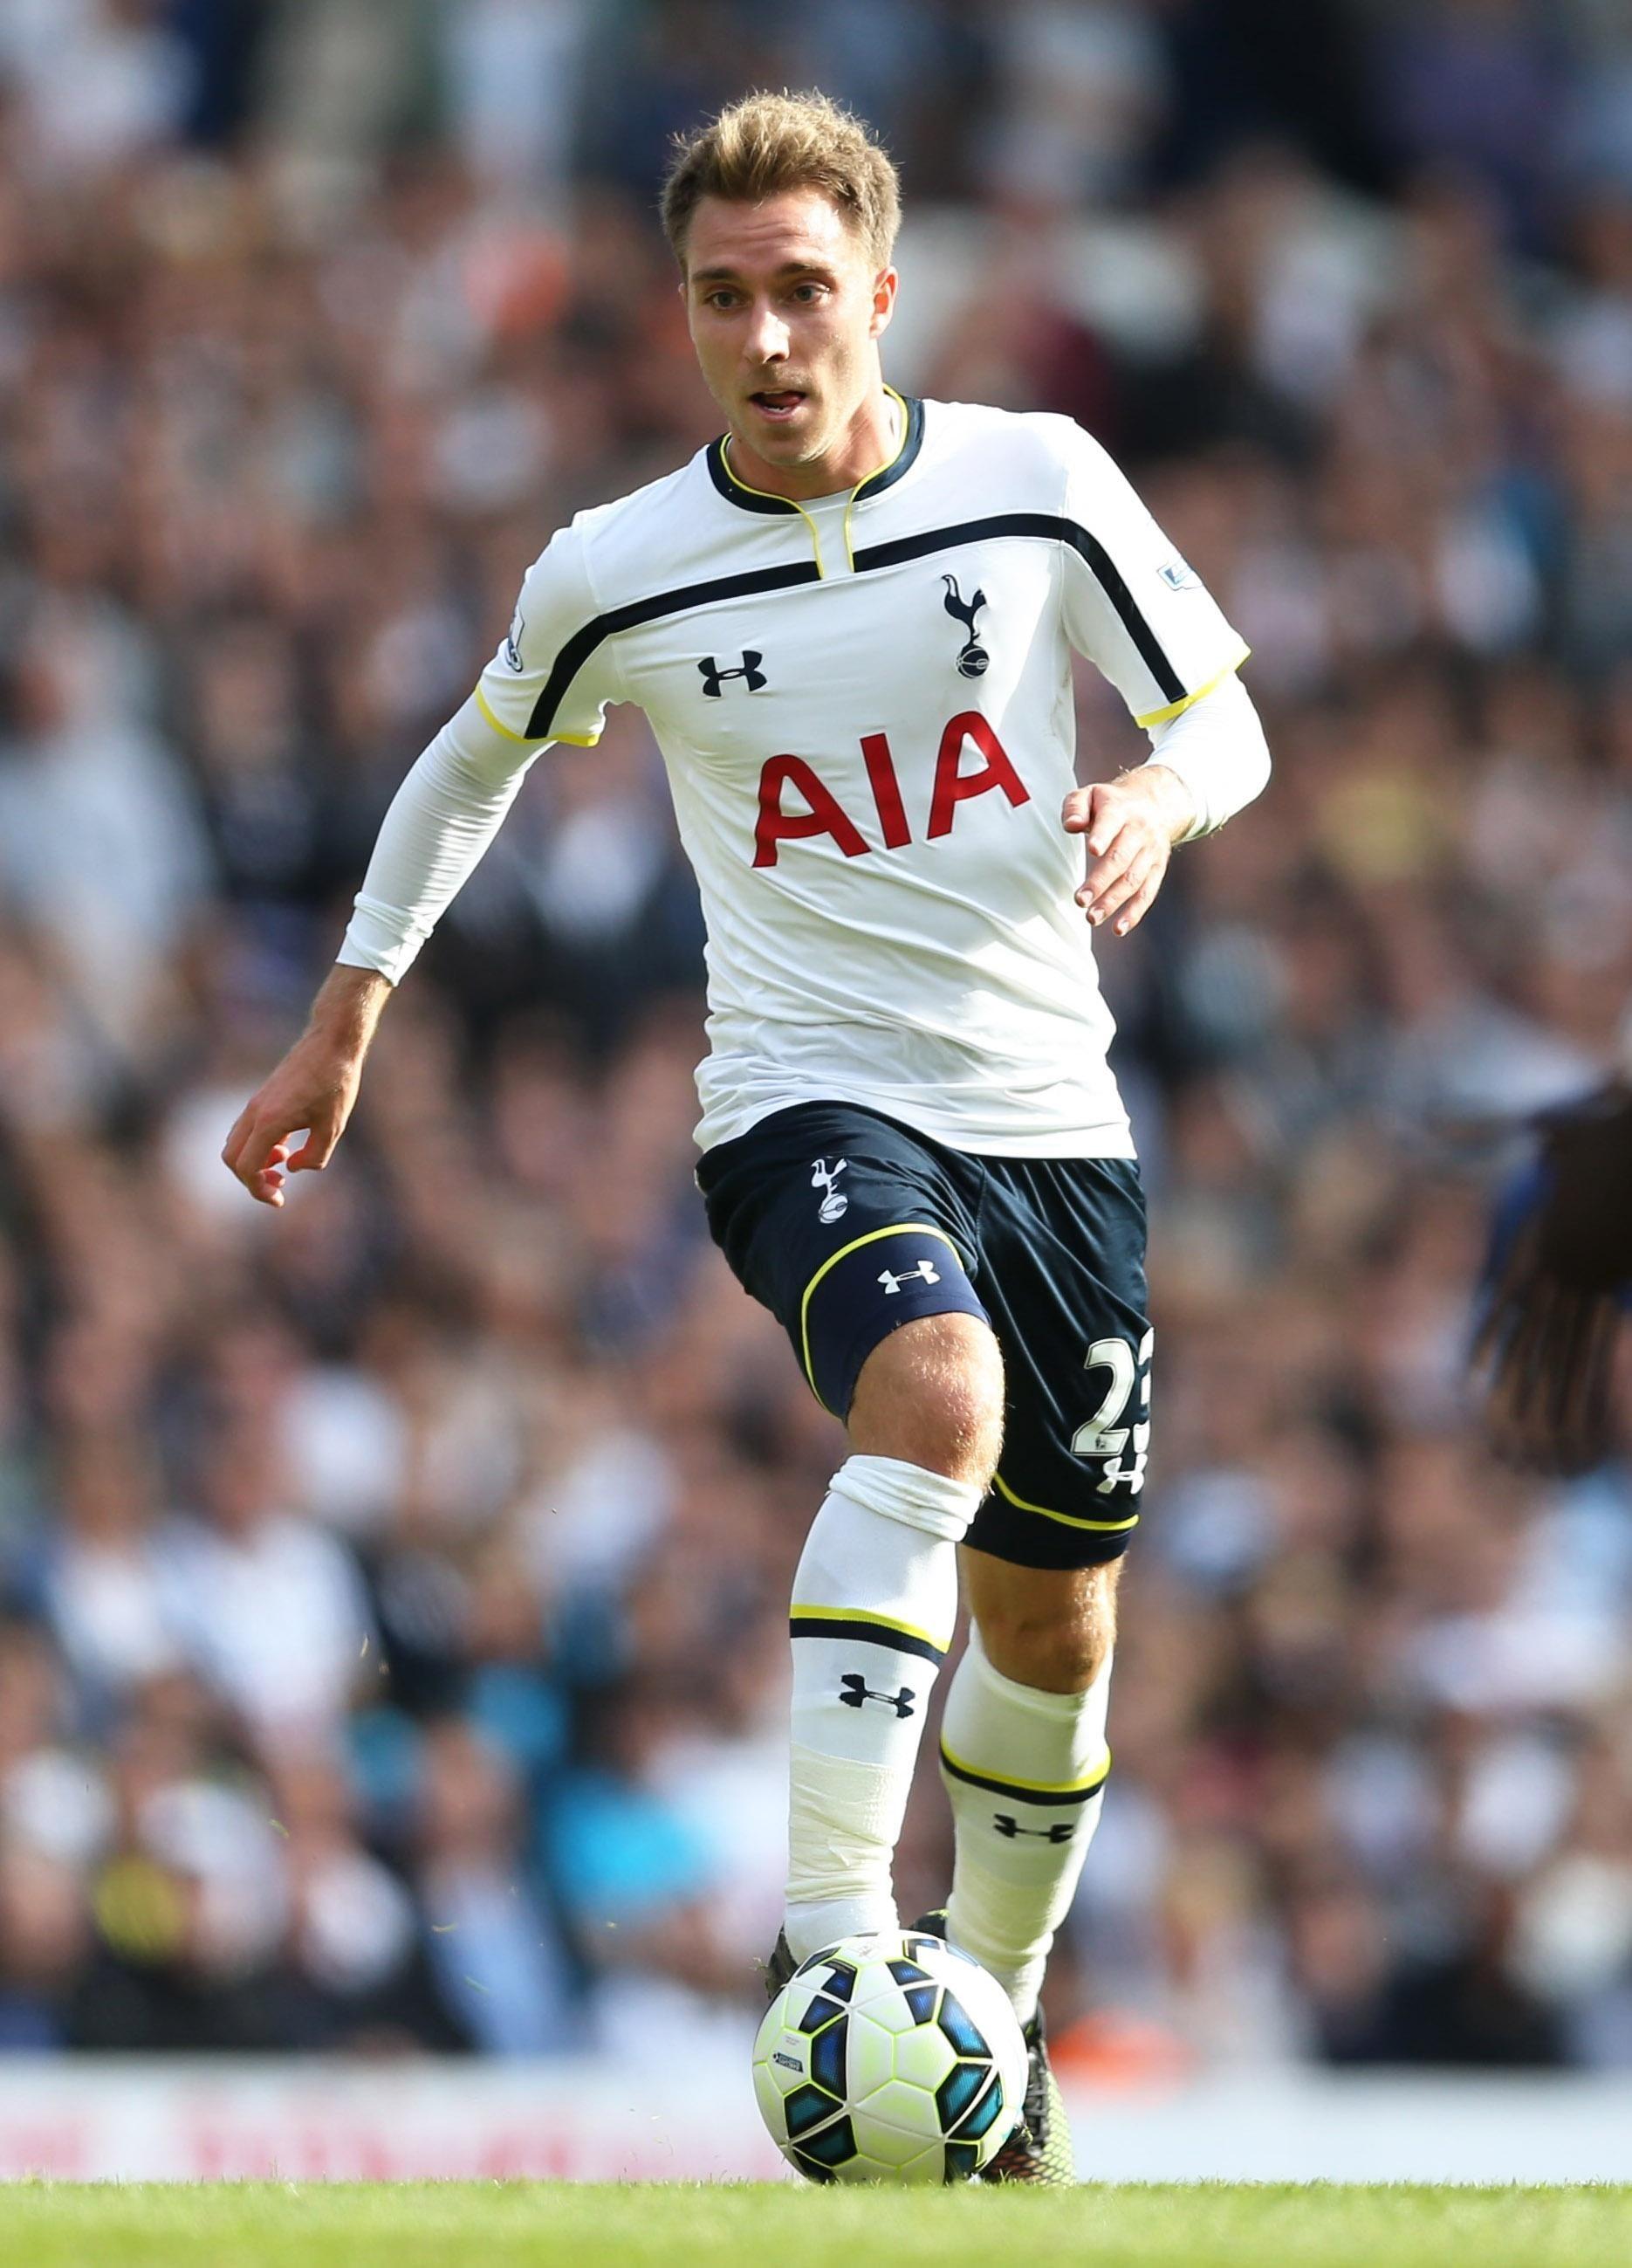 Christian Eriksen of Tottenham Hotspur. Soccer. Tottenham hotspur